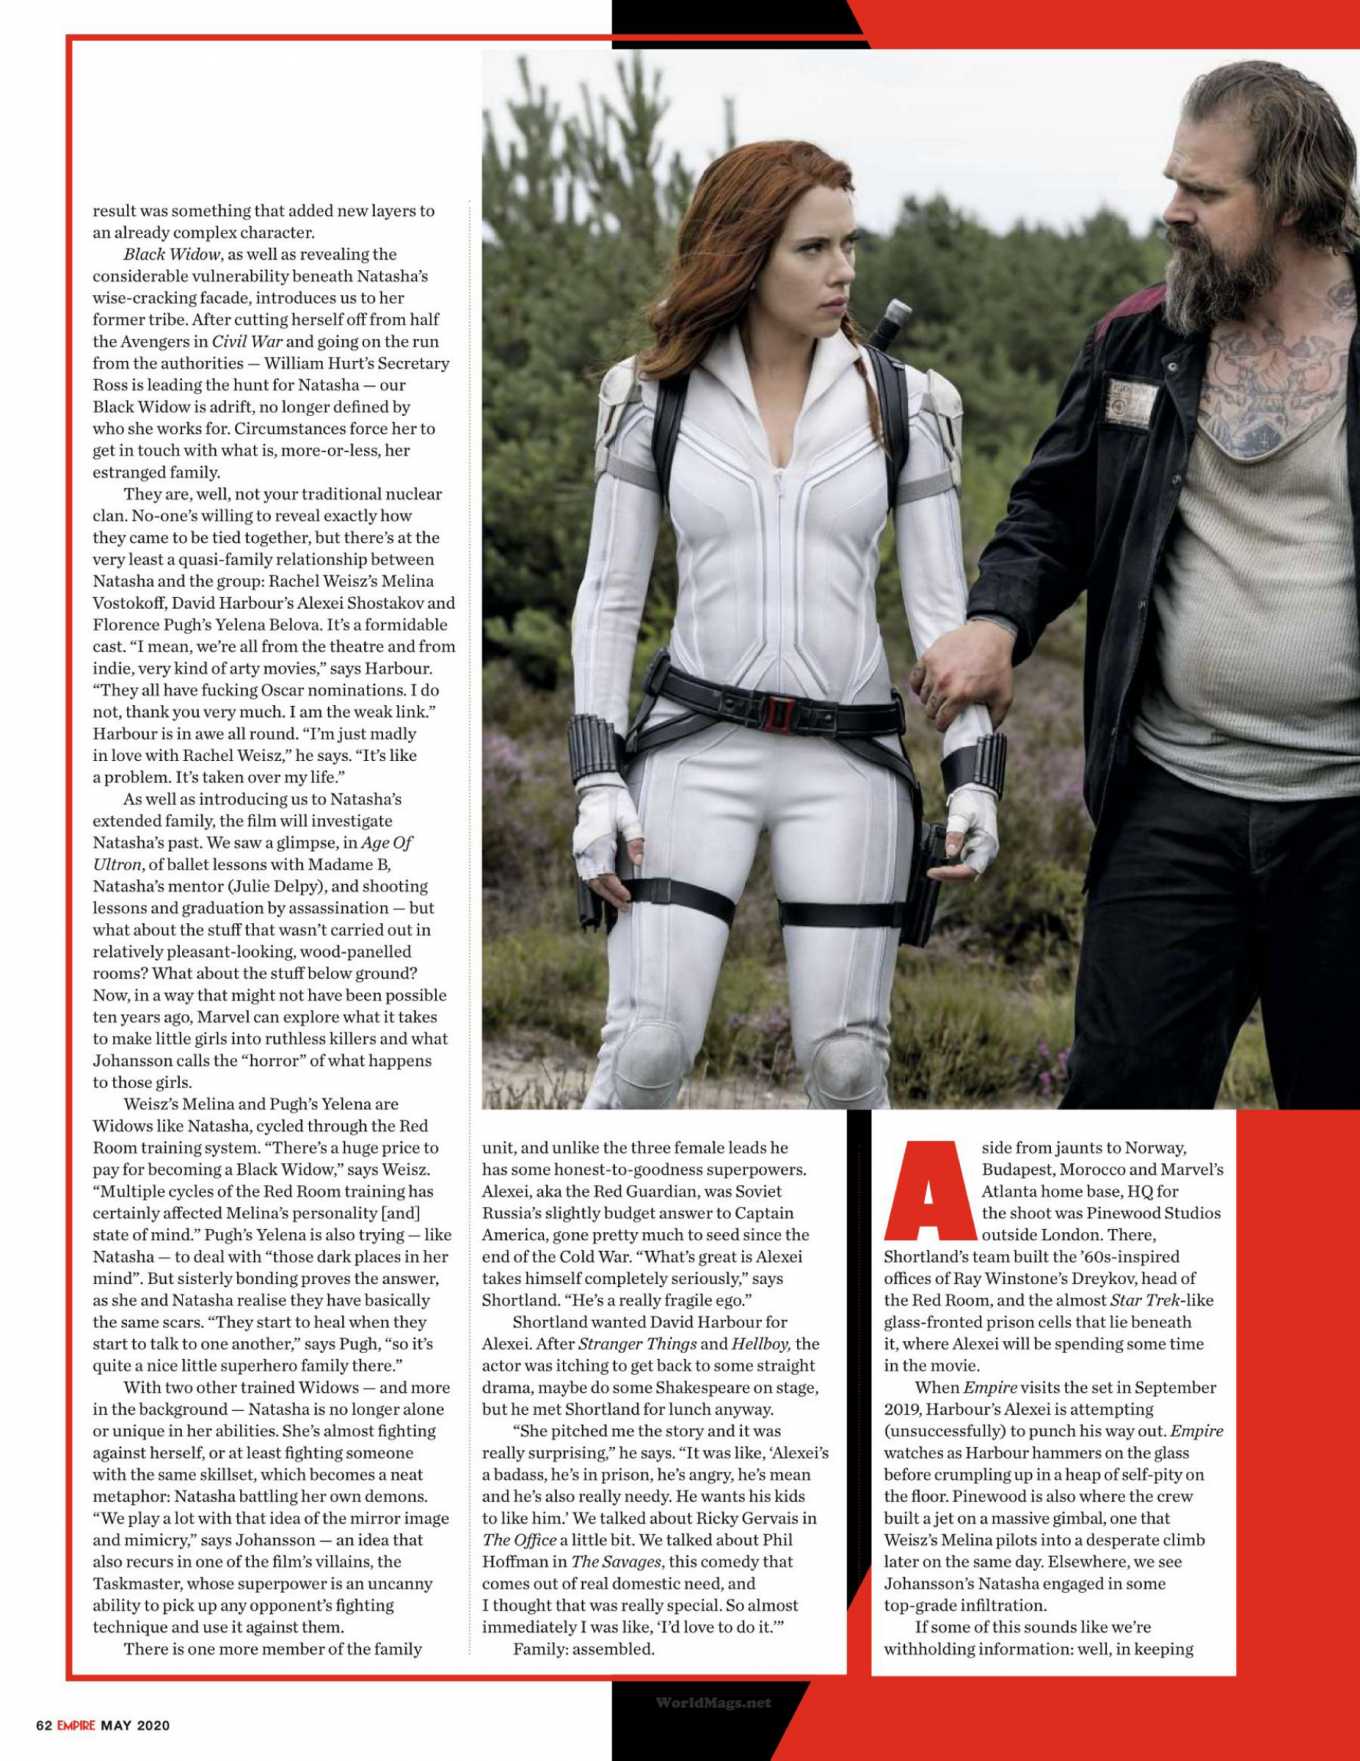 Scarlett Johansson for Empire Magazine (May 2020)